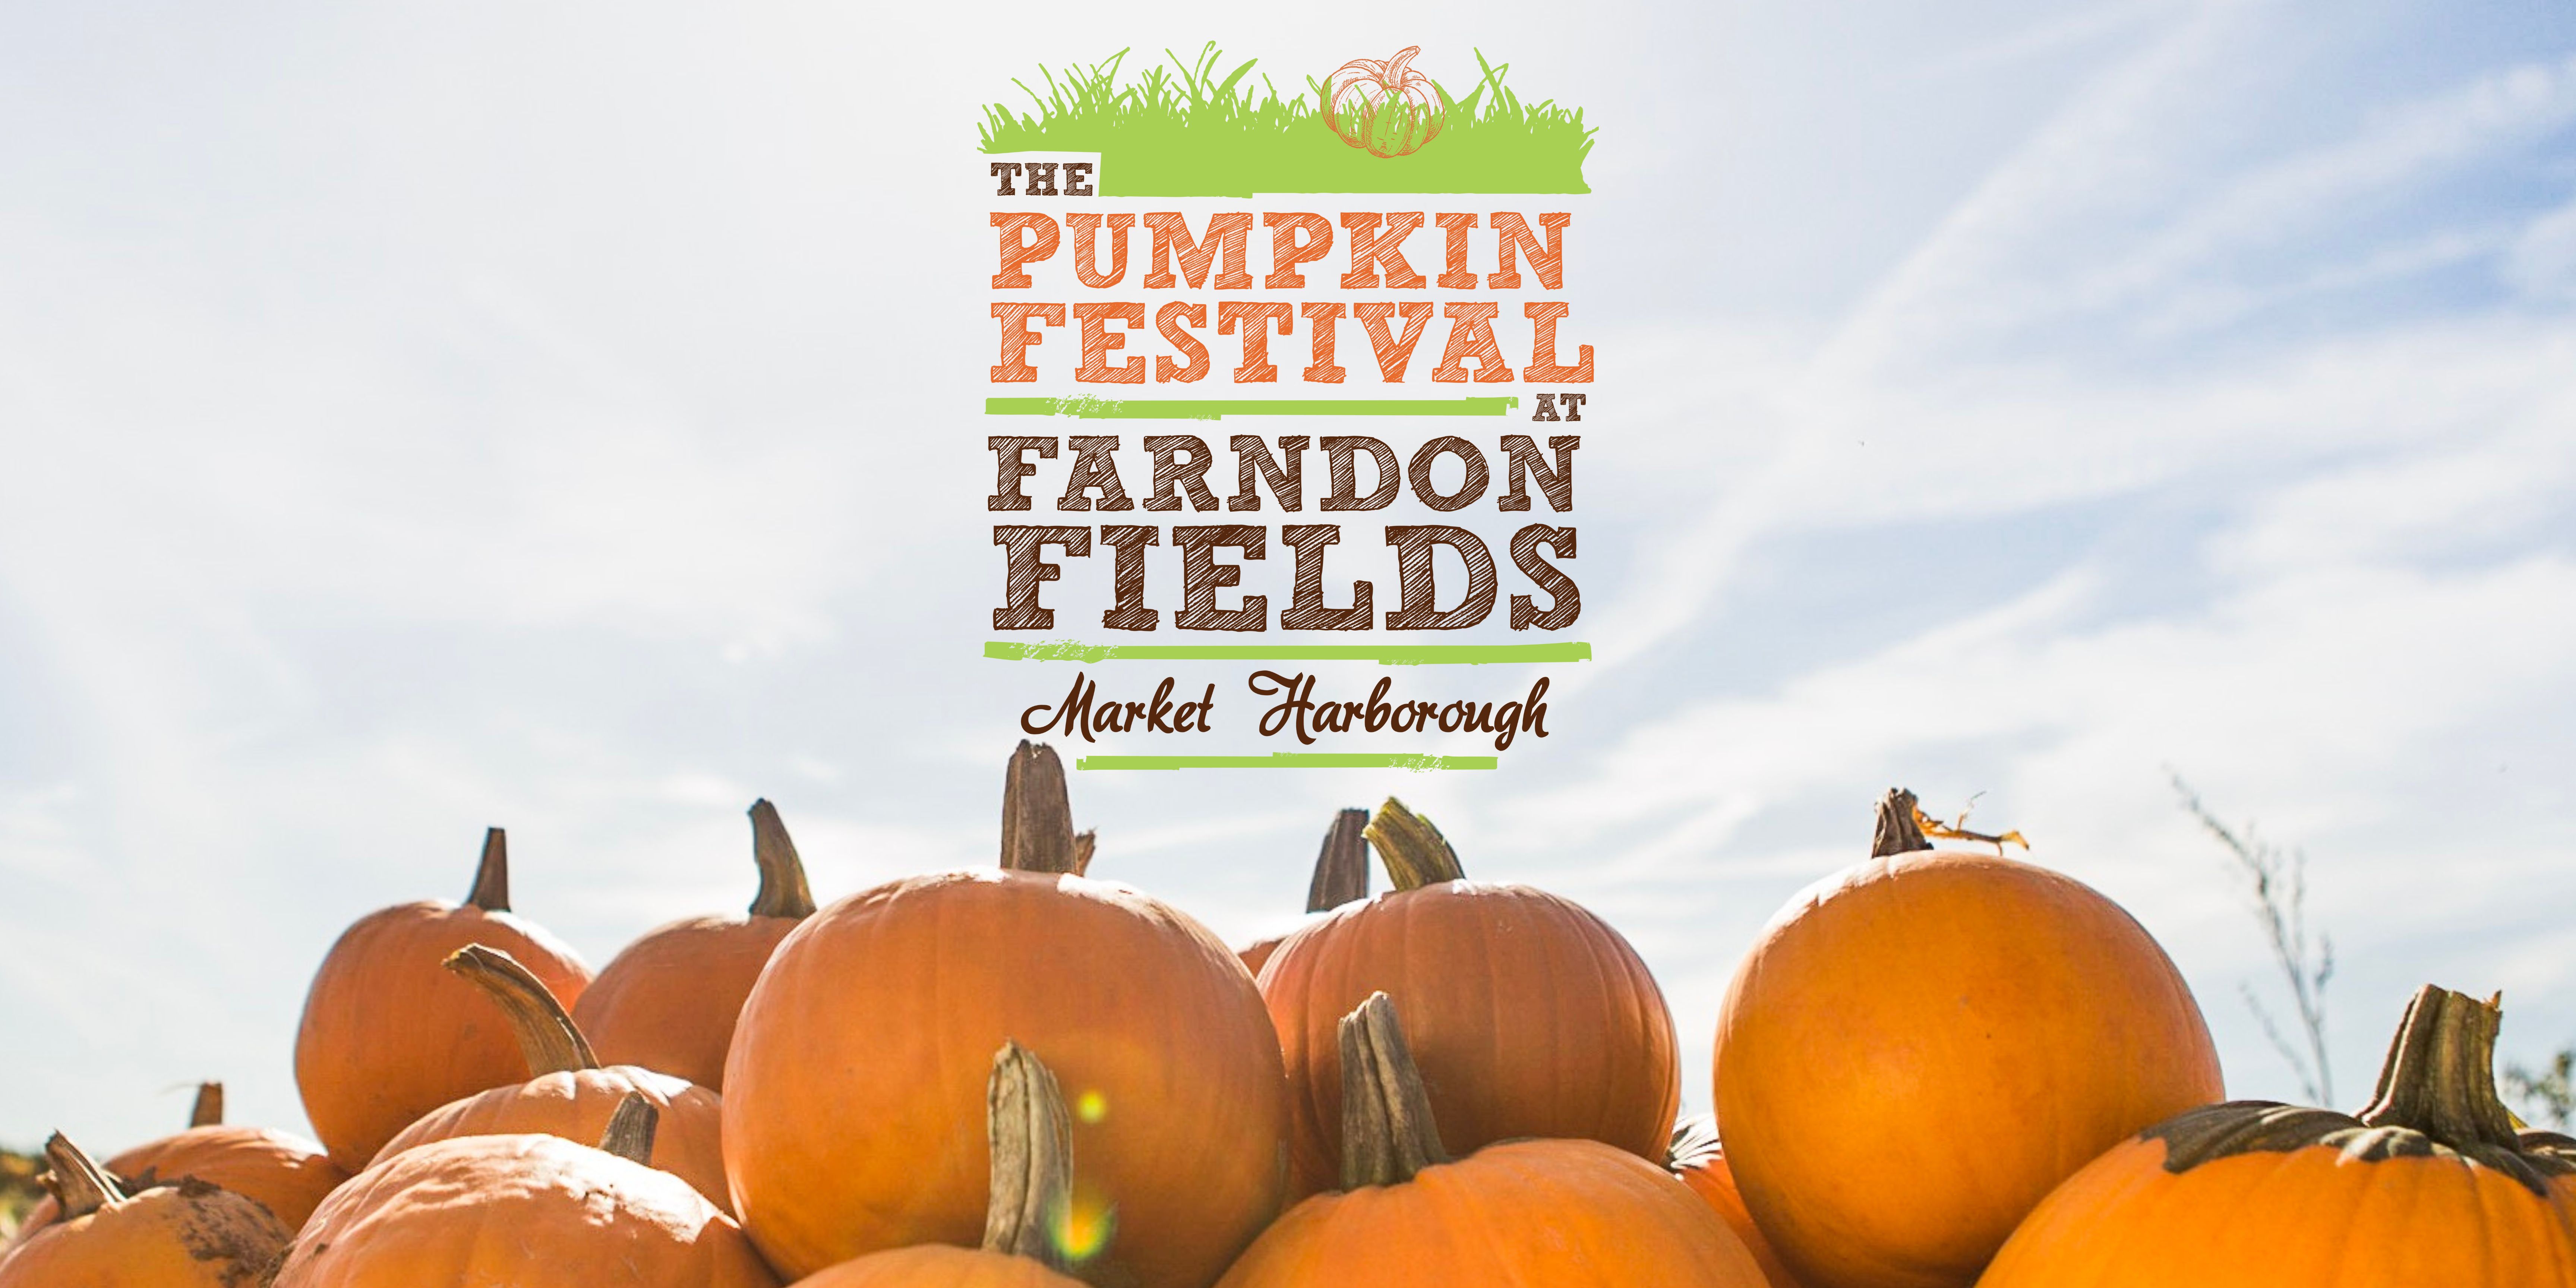 TICKETS NOW ON SALE! The Pumpkin Festival at Farndon Fields 🎃